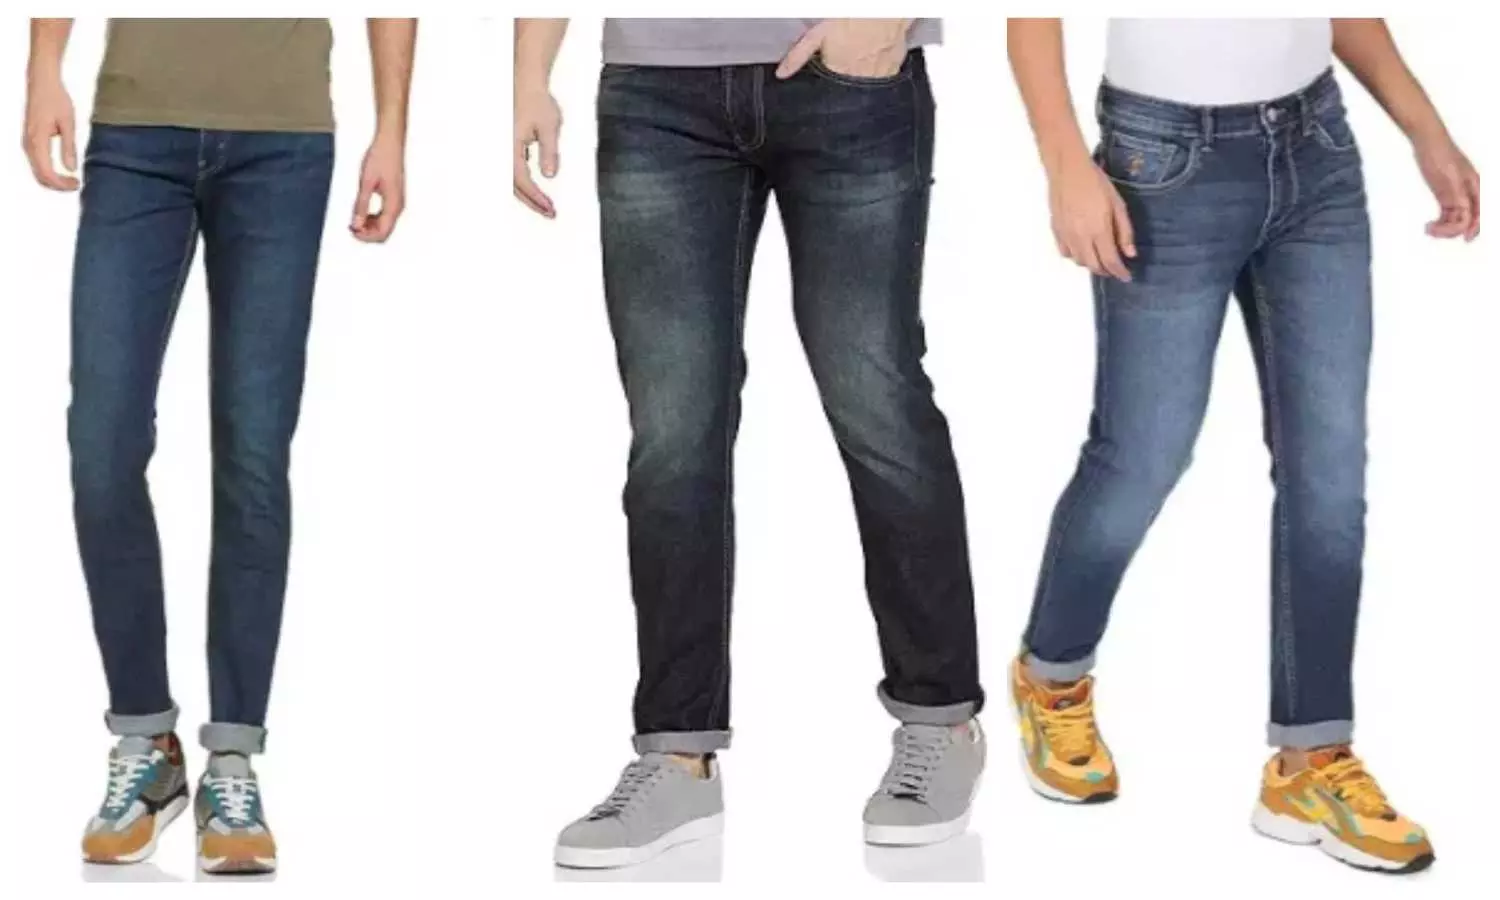 Top 5 Best Mens Jeans Brands